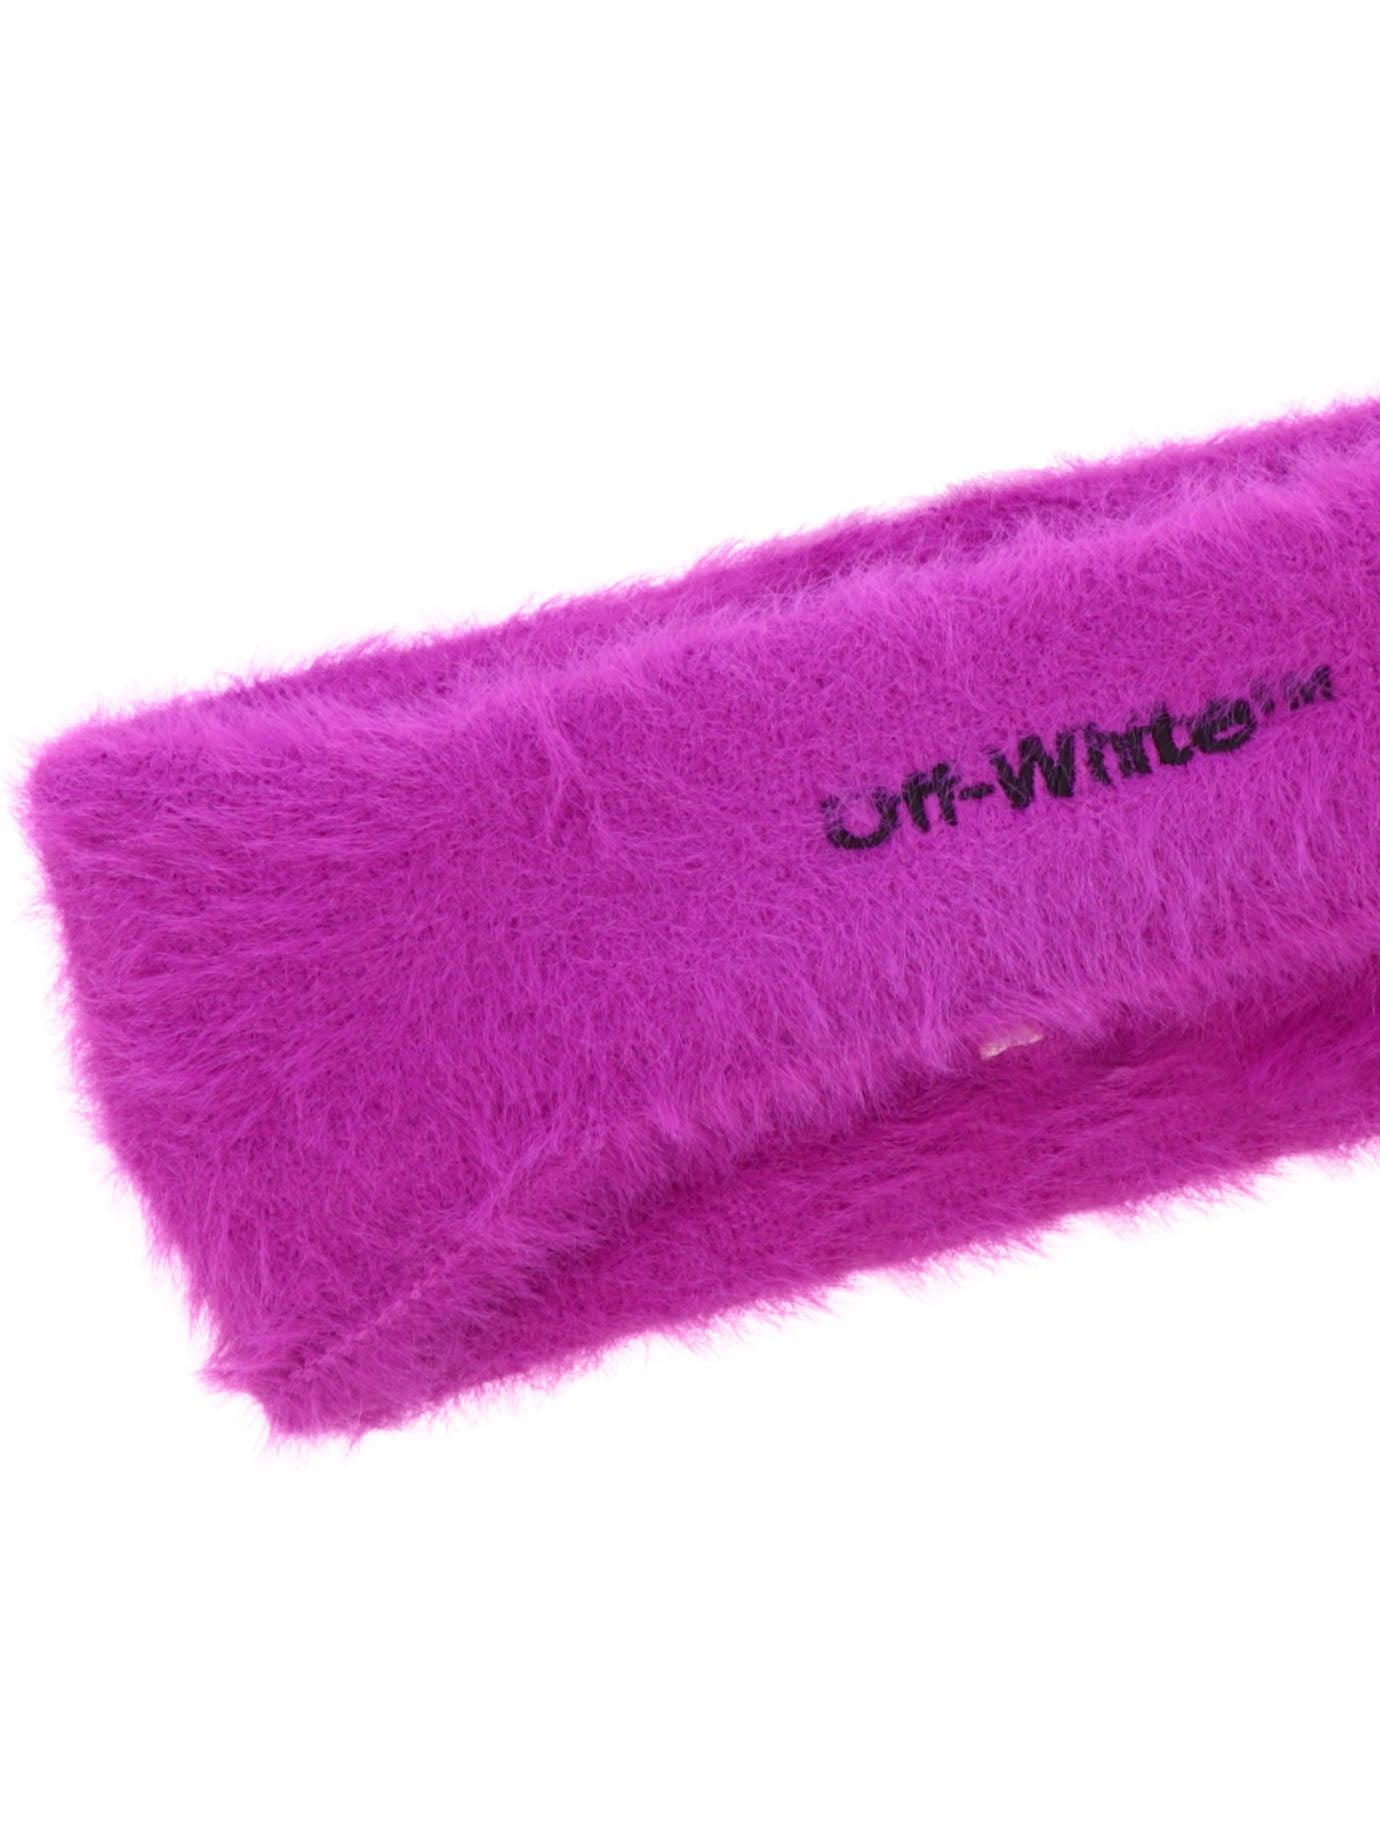 Off-White c/o Virgil Abloh Gloves in Pink